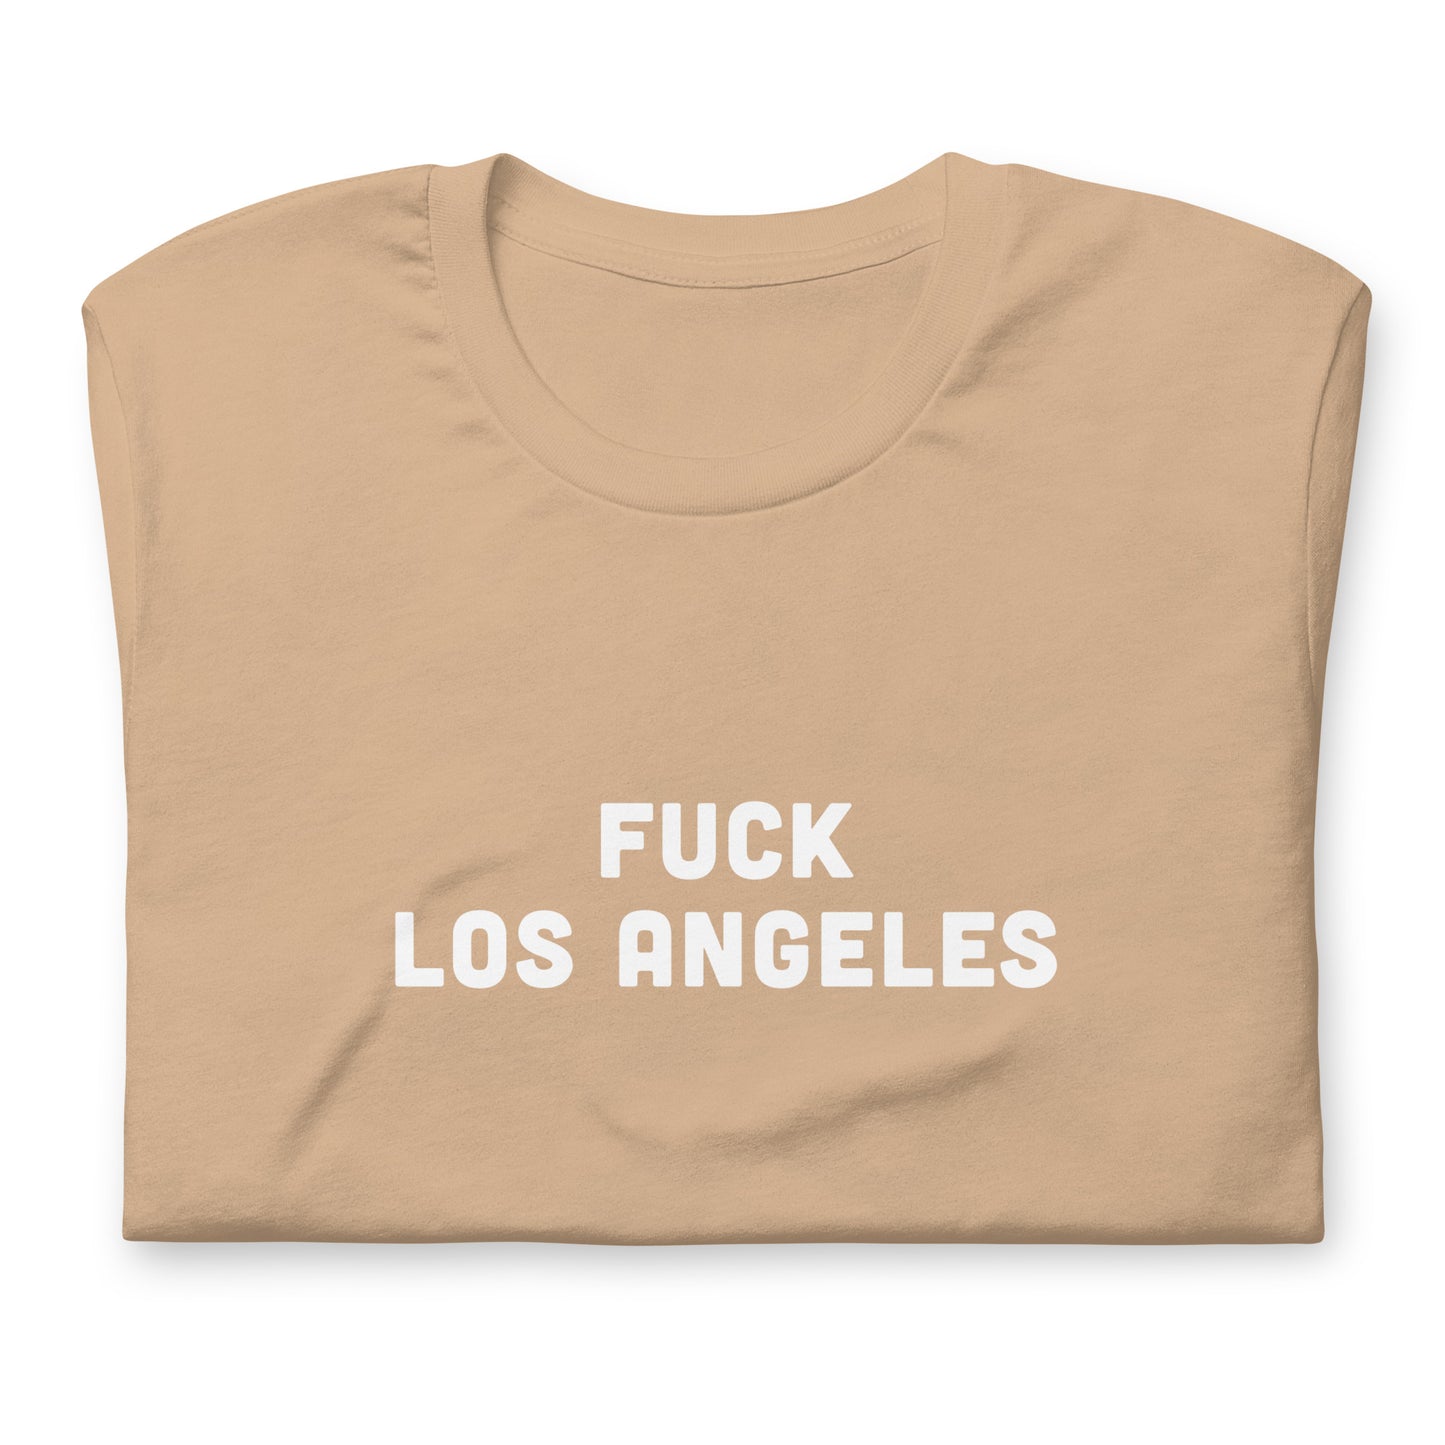 Fuck Los Angeles T-Shirt Size 2XL Color Forest